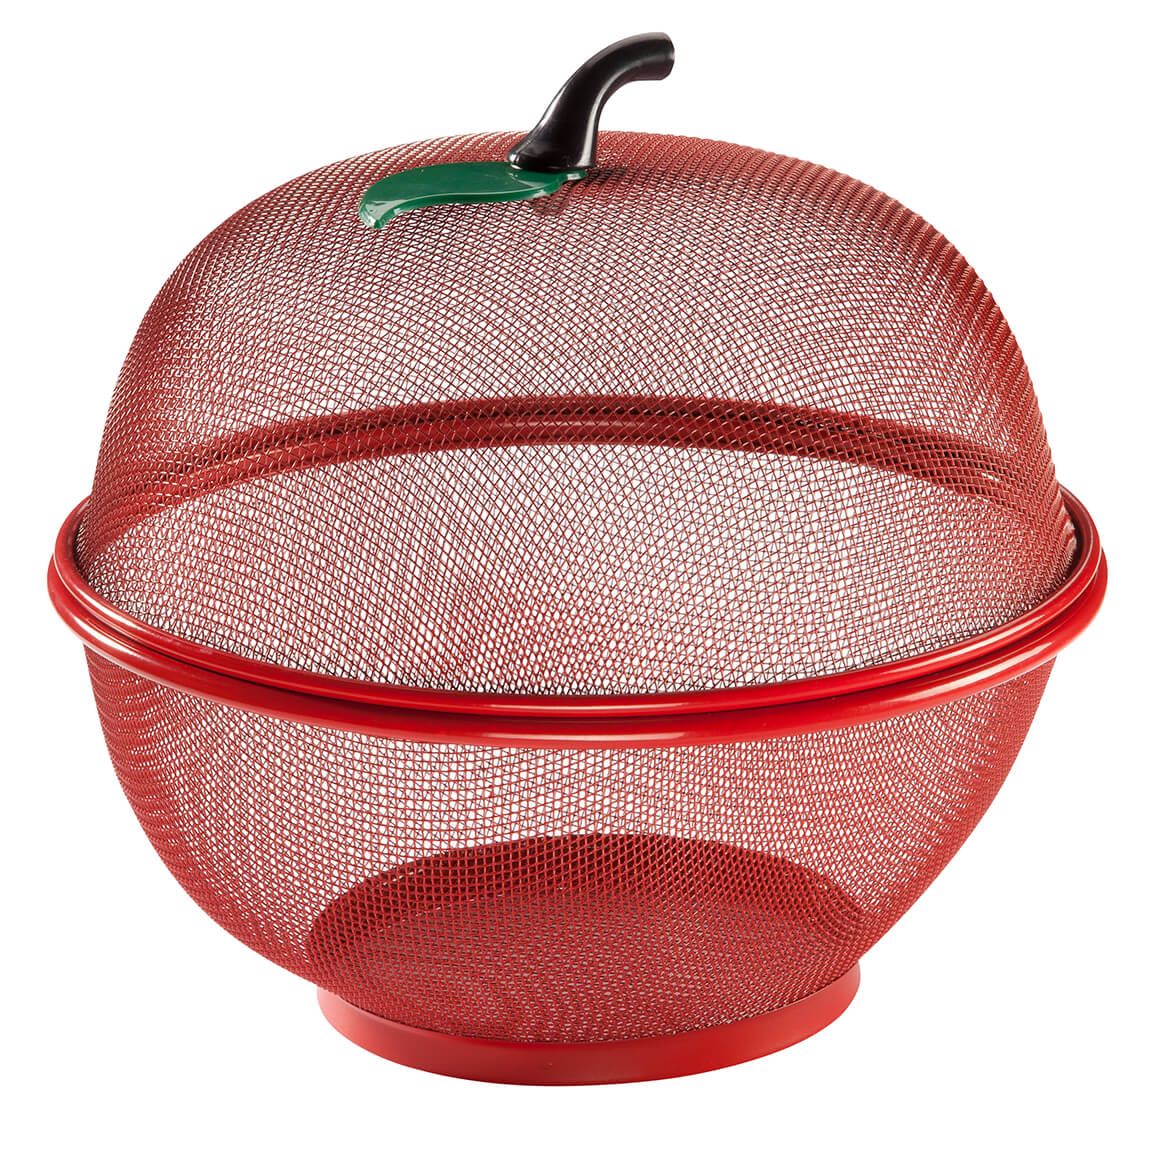 Apple-Shaped Mesh Basket + '-' + 350435